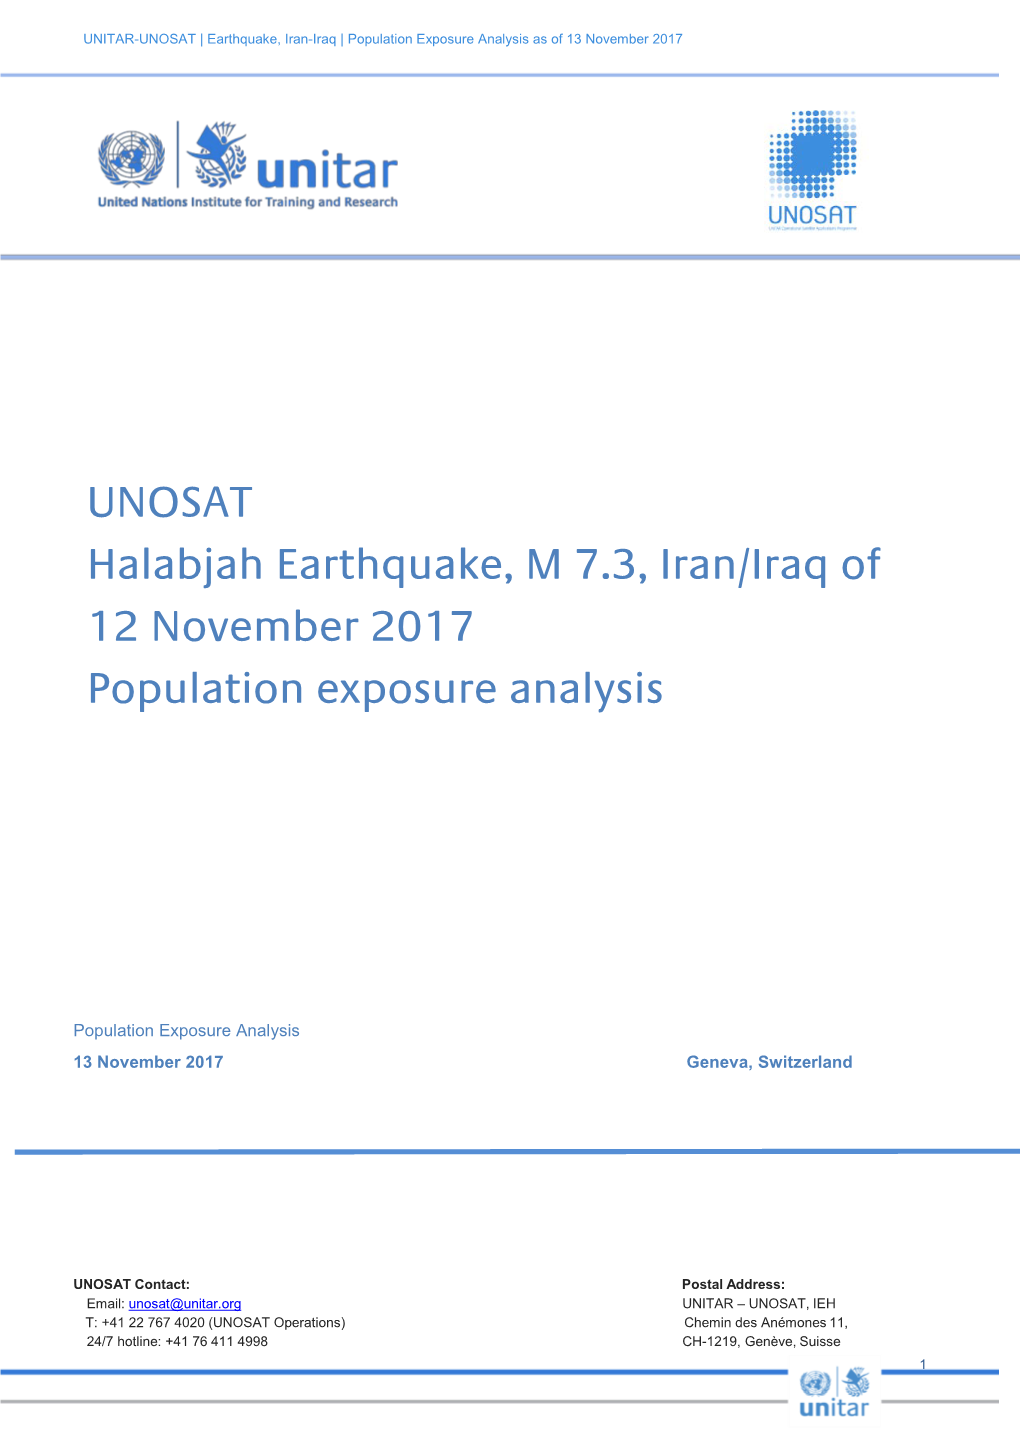 UNOSAT Halabjah Earthquake, M 7.3, Iran/Iraq of 12 November 2017 Population Exposure Analysis